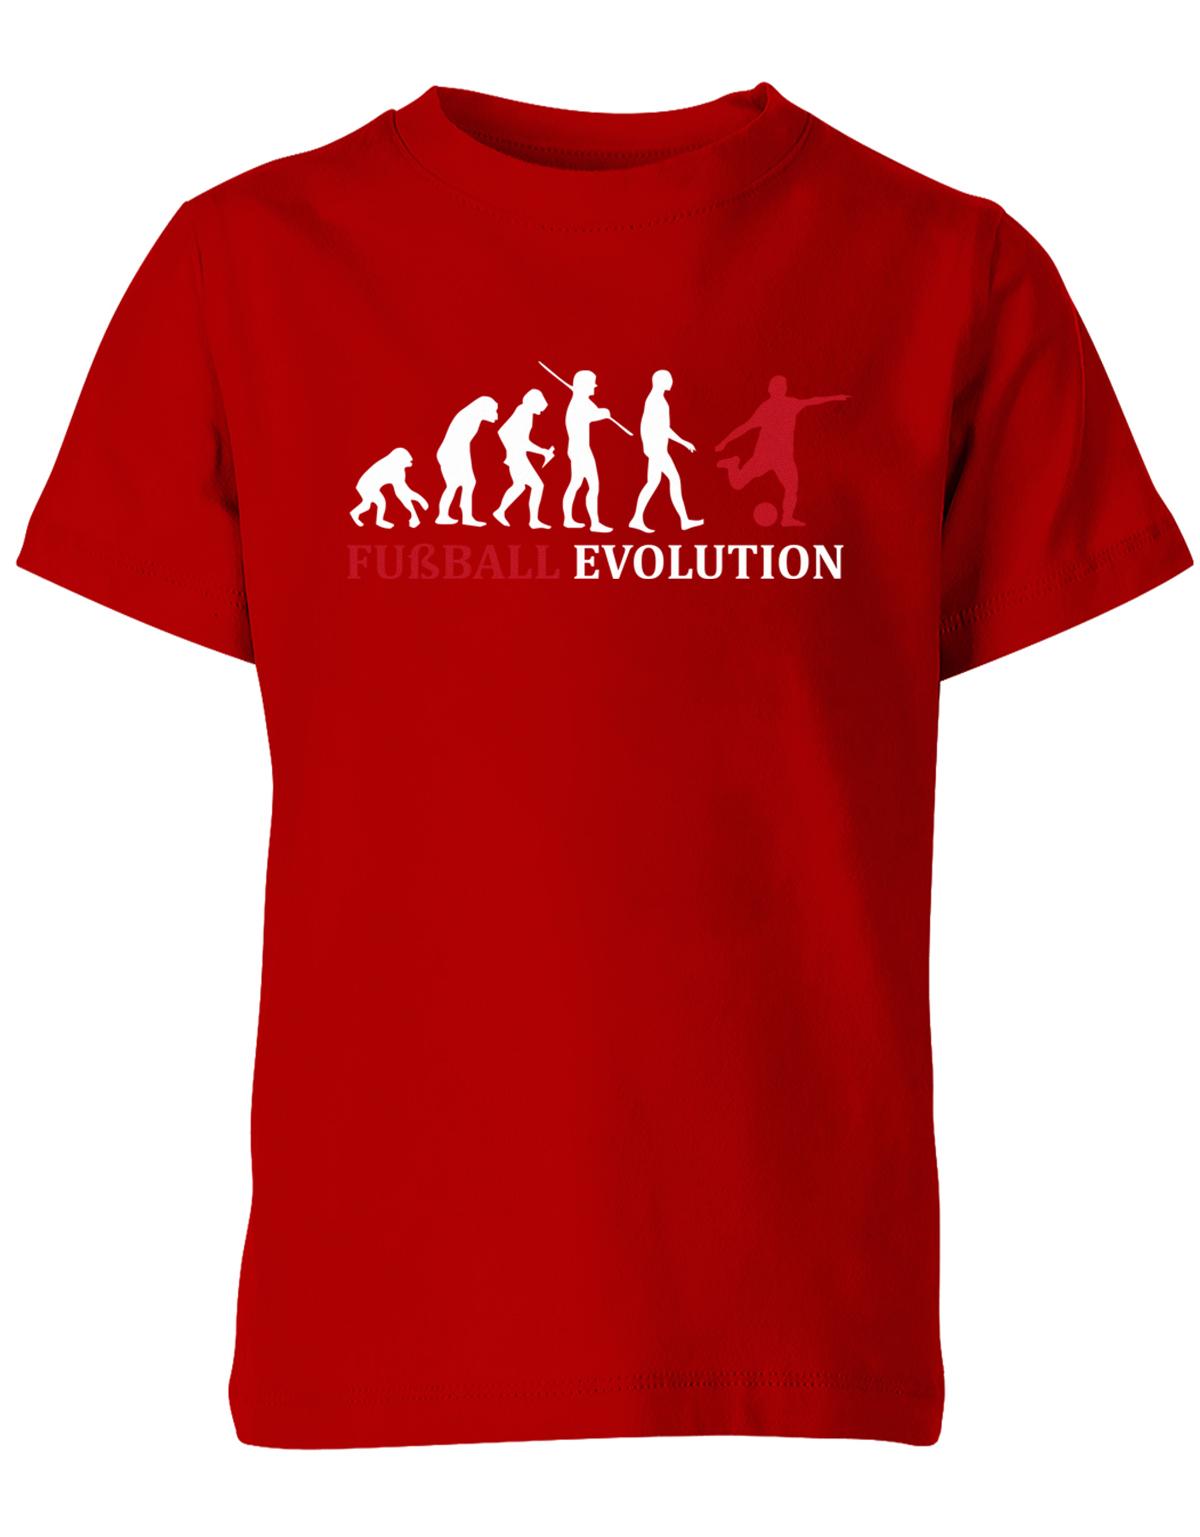 Fussball-Evolution-Kinder-Shirt-Rot-Rot